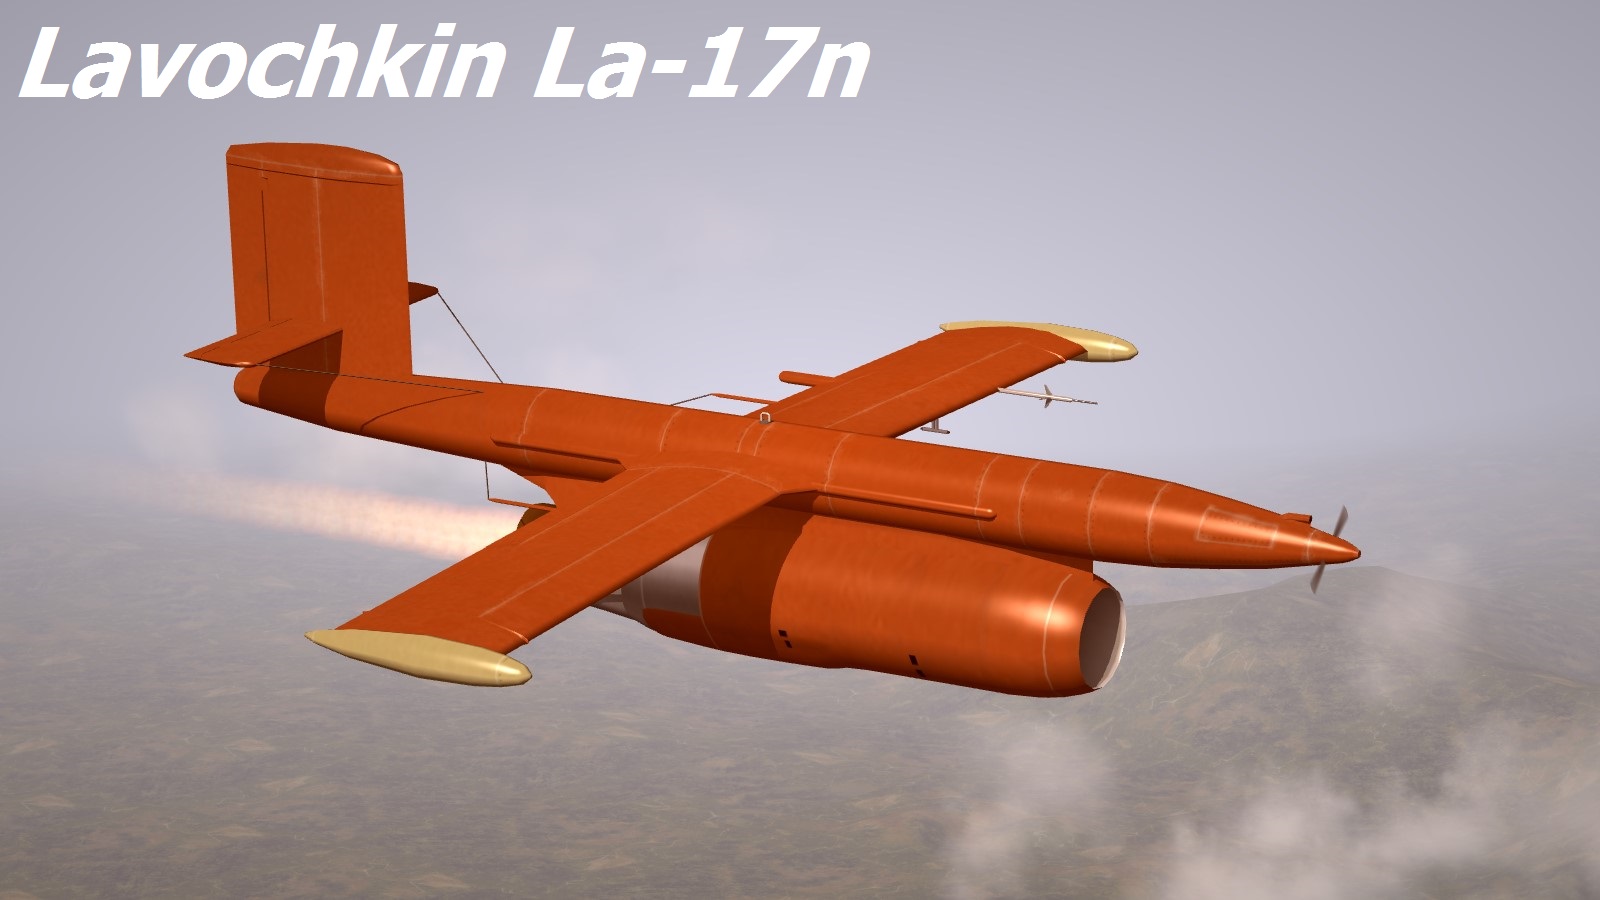 SF2 Lavochkin La-17n & La-17R